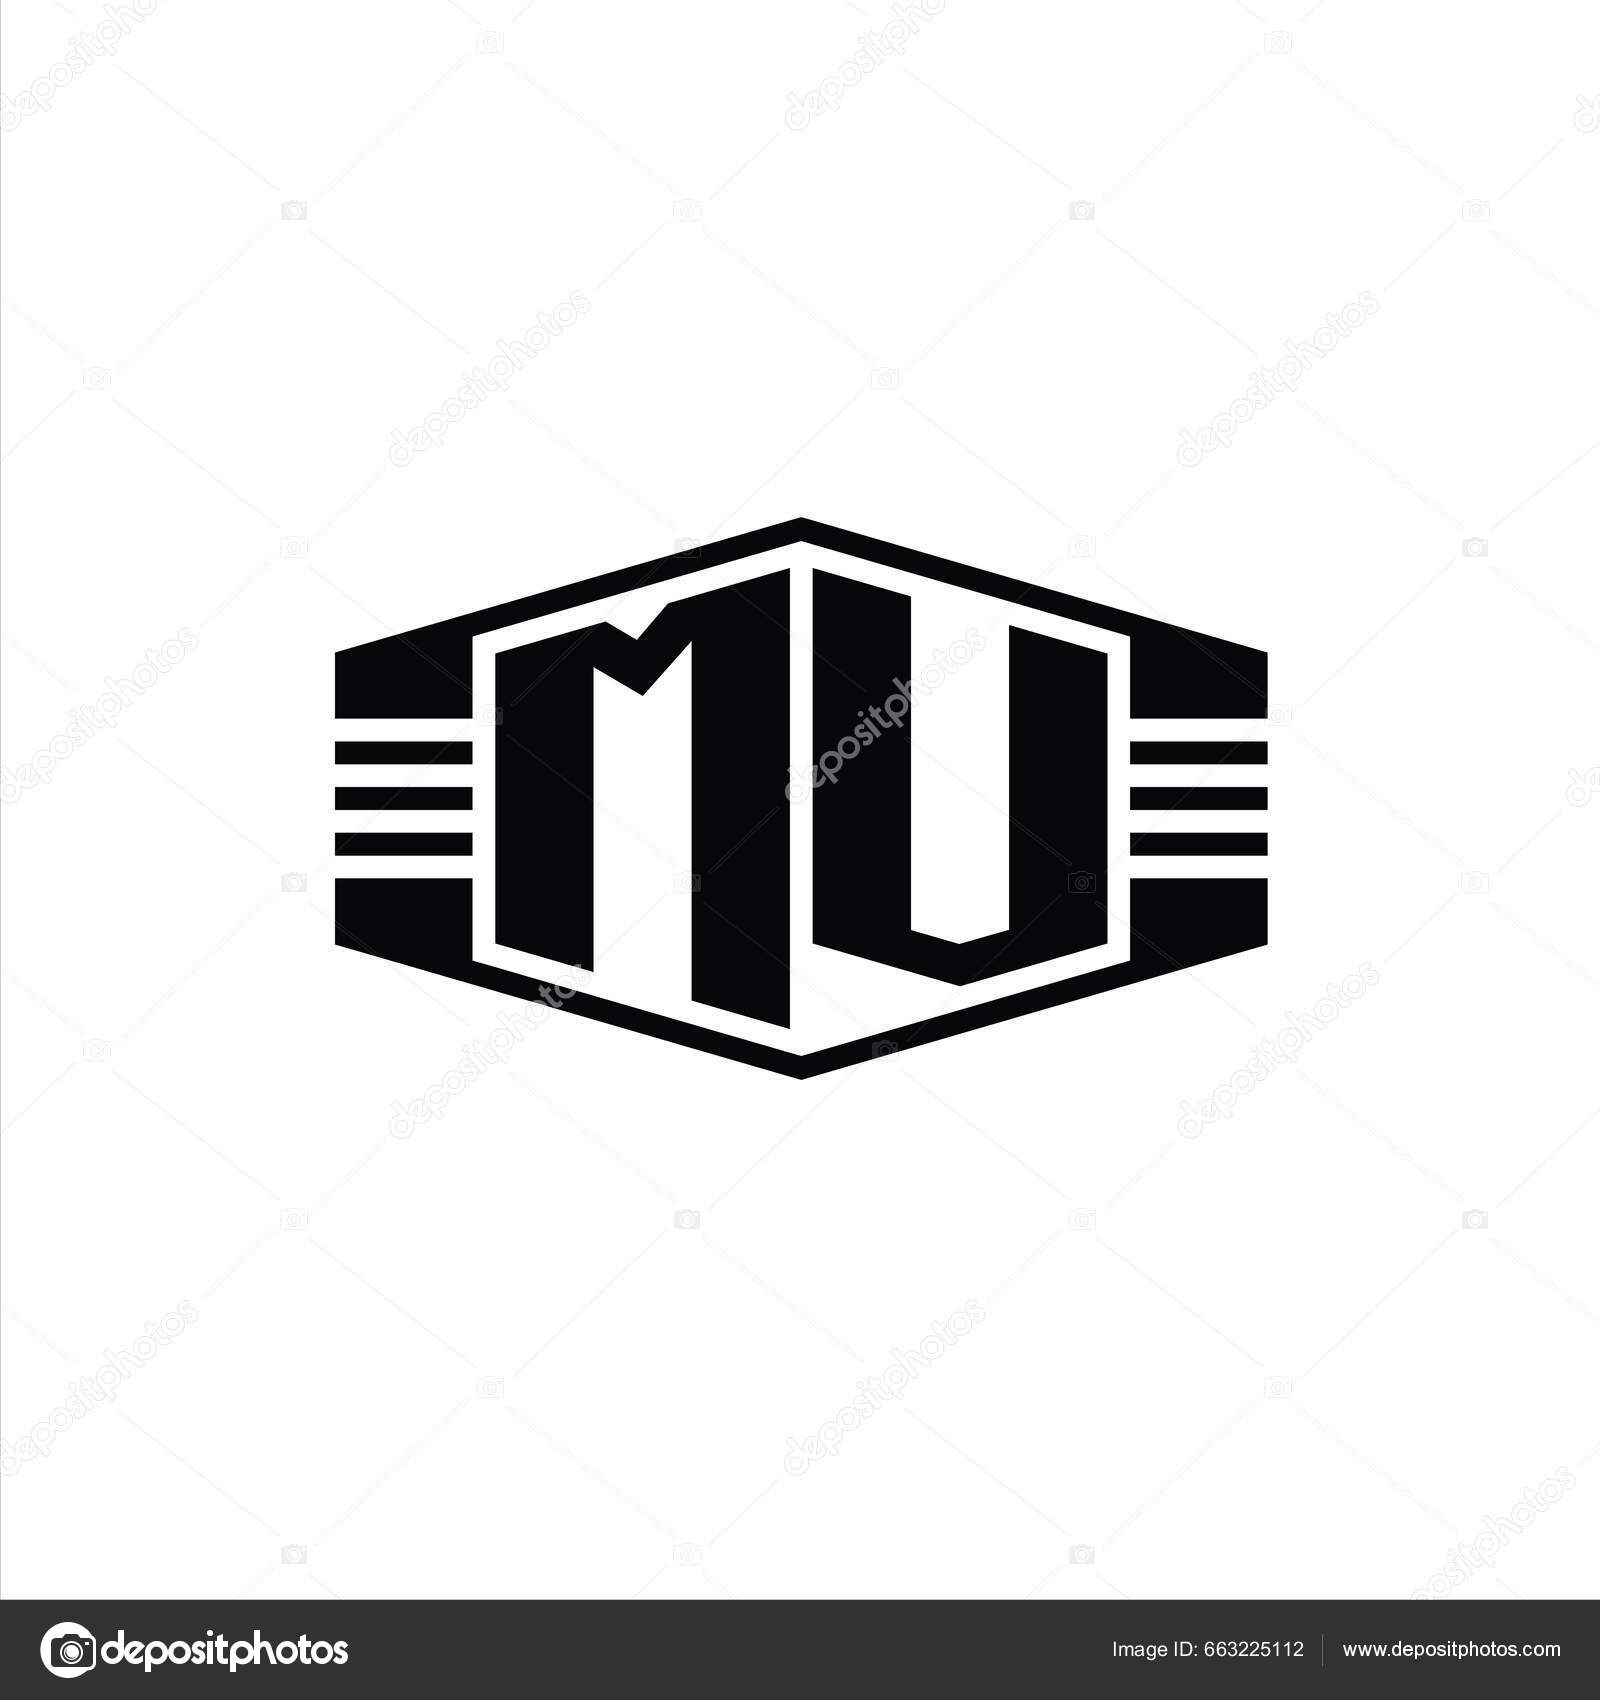 Mm logo emblem monogram with shield style design Vector Image